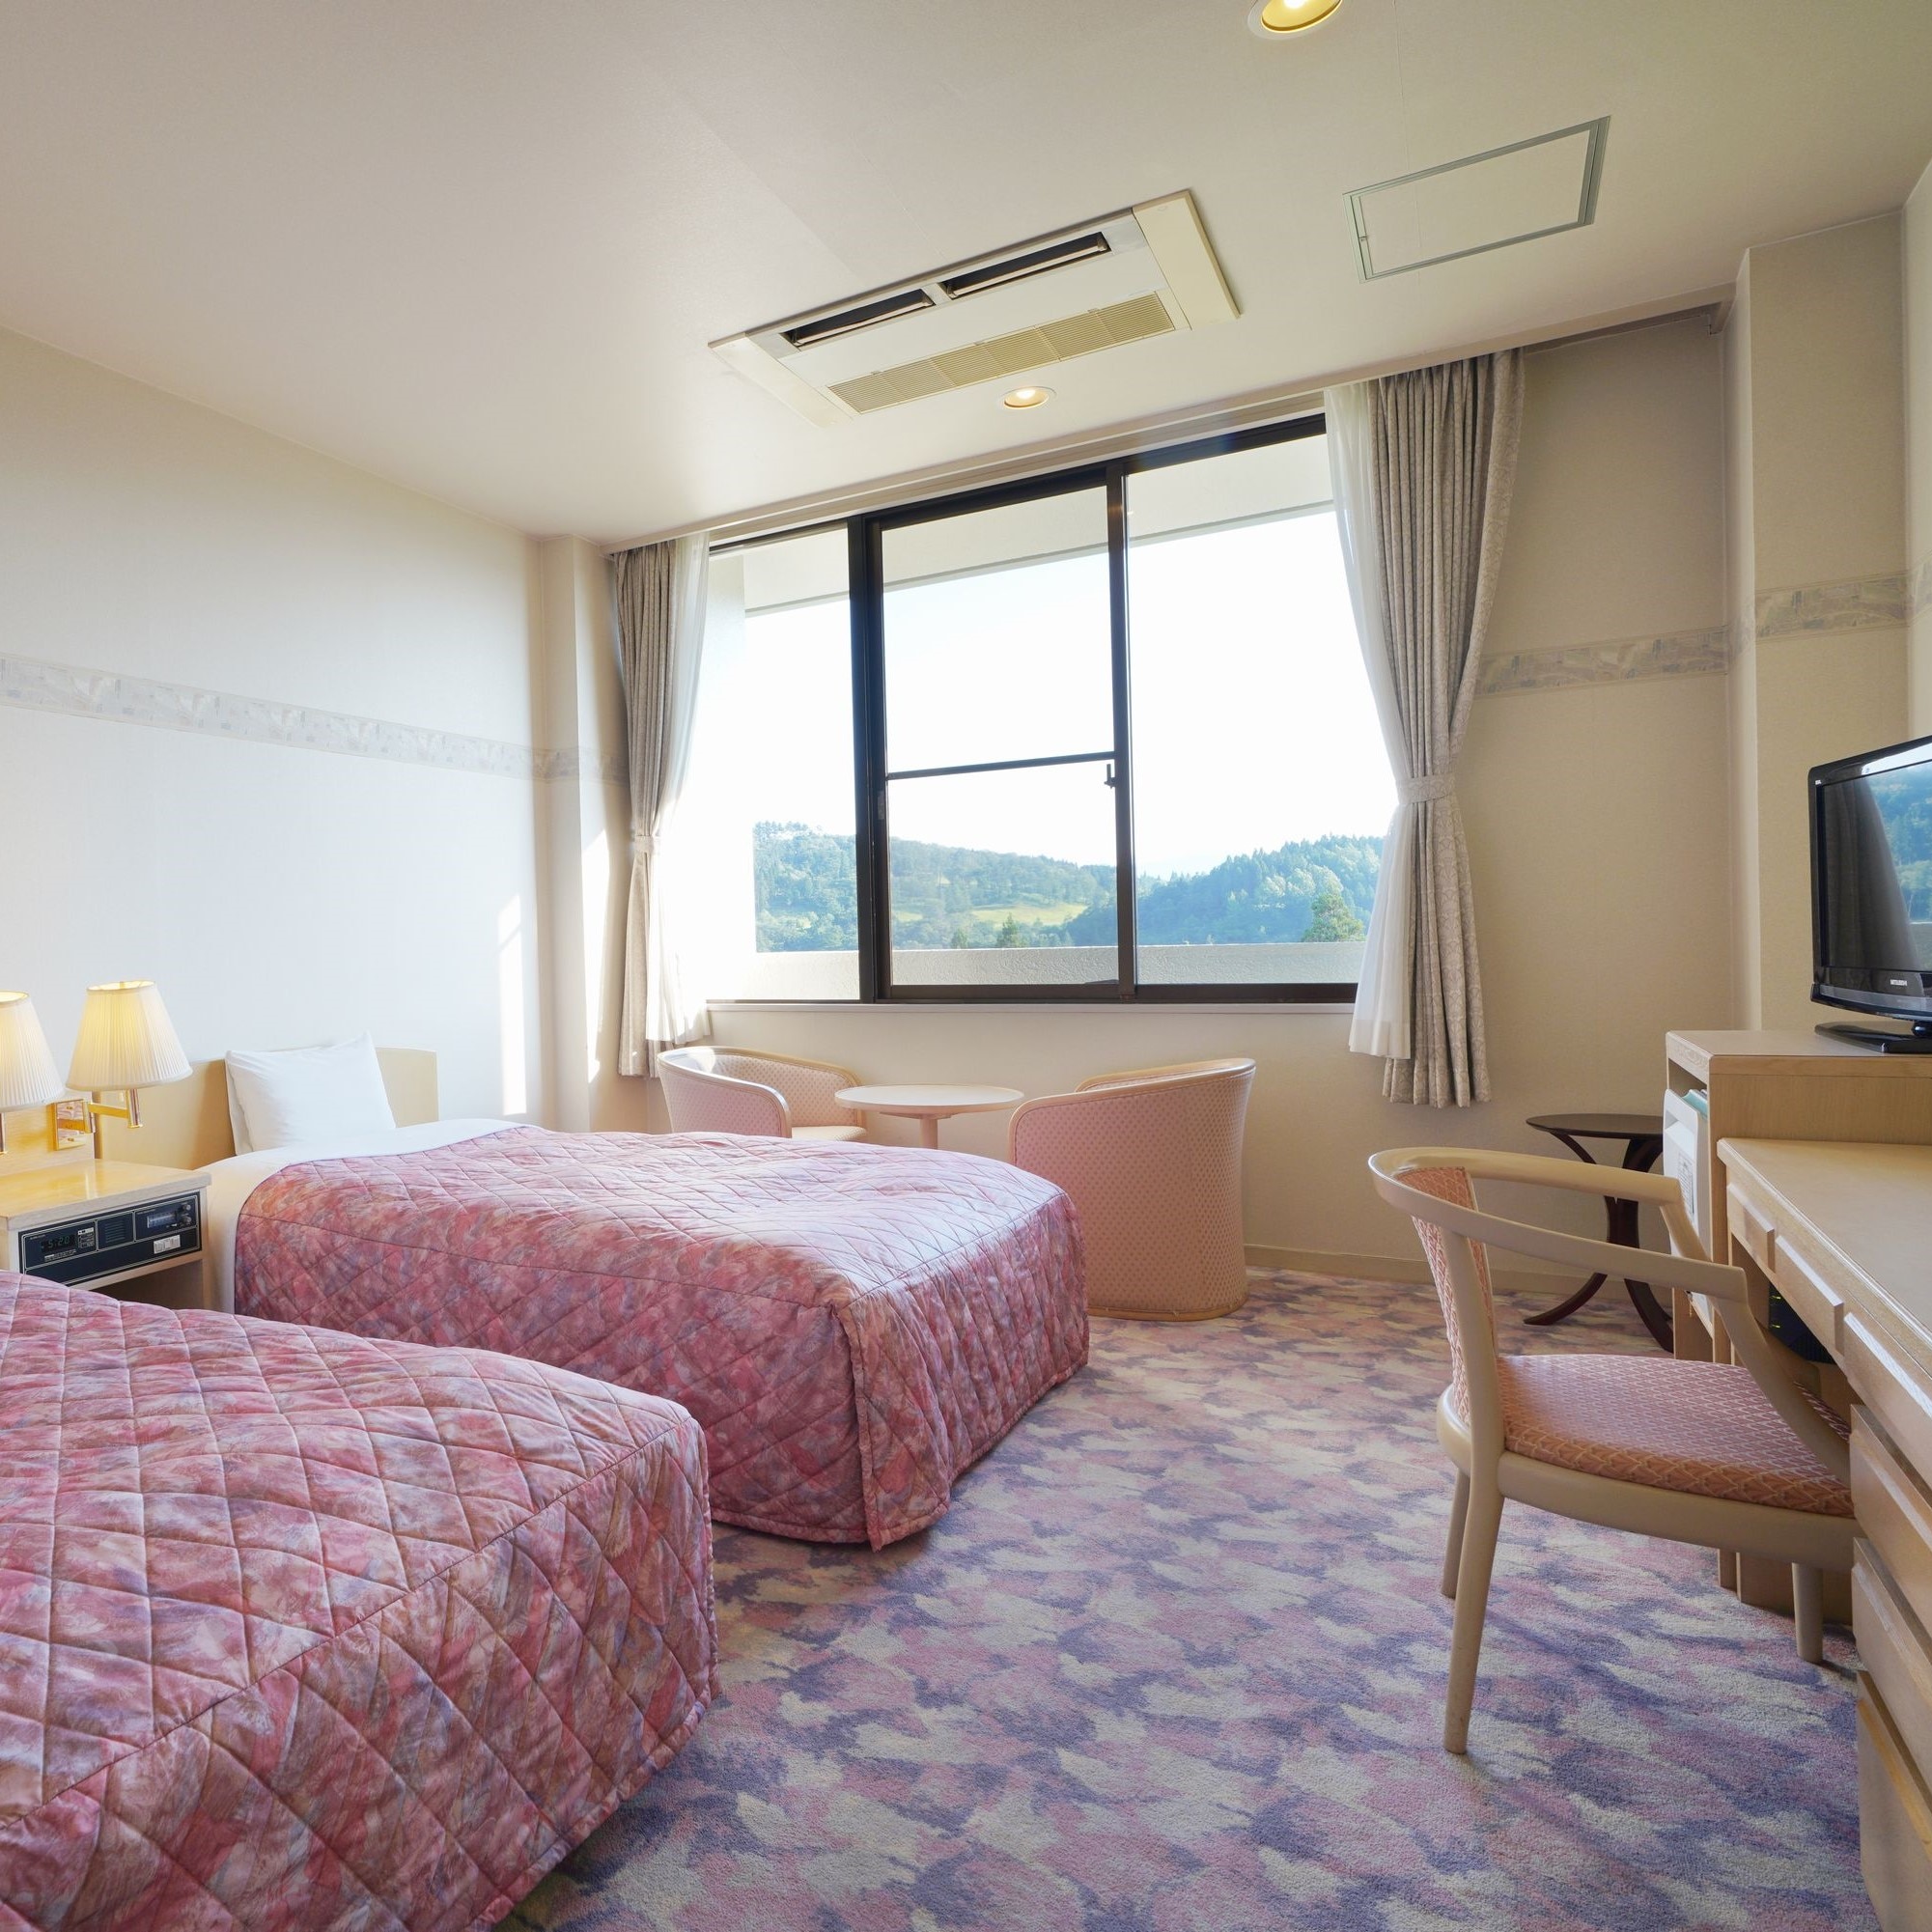 Aoyama Hotel Western-style room example